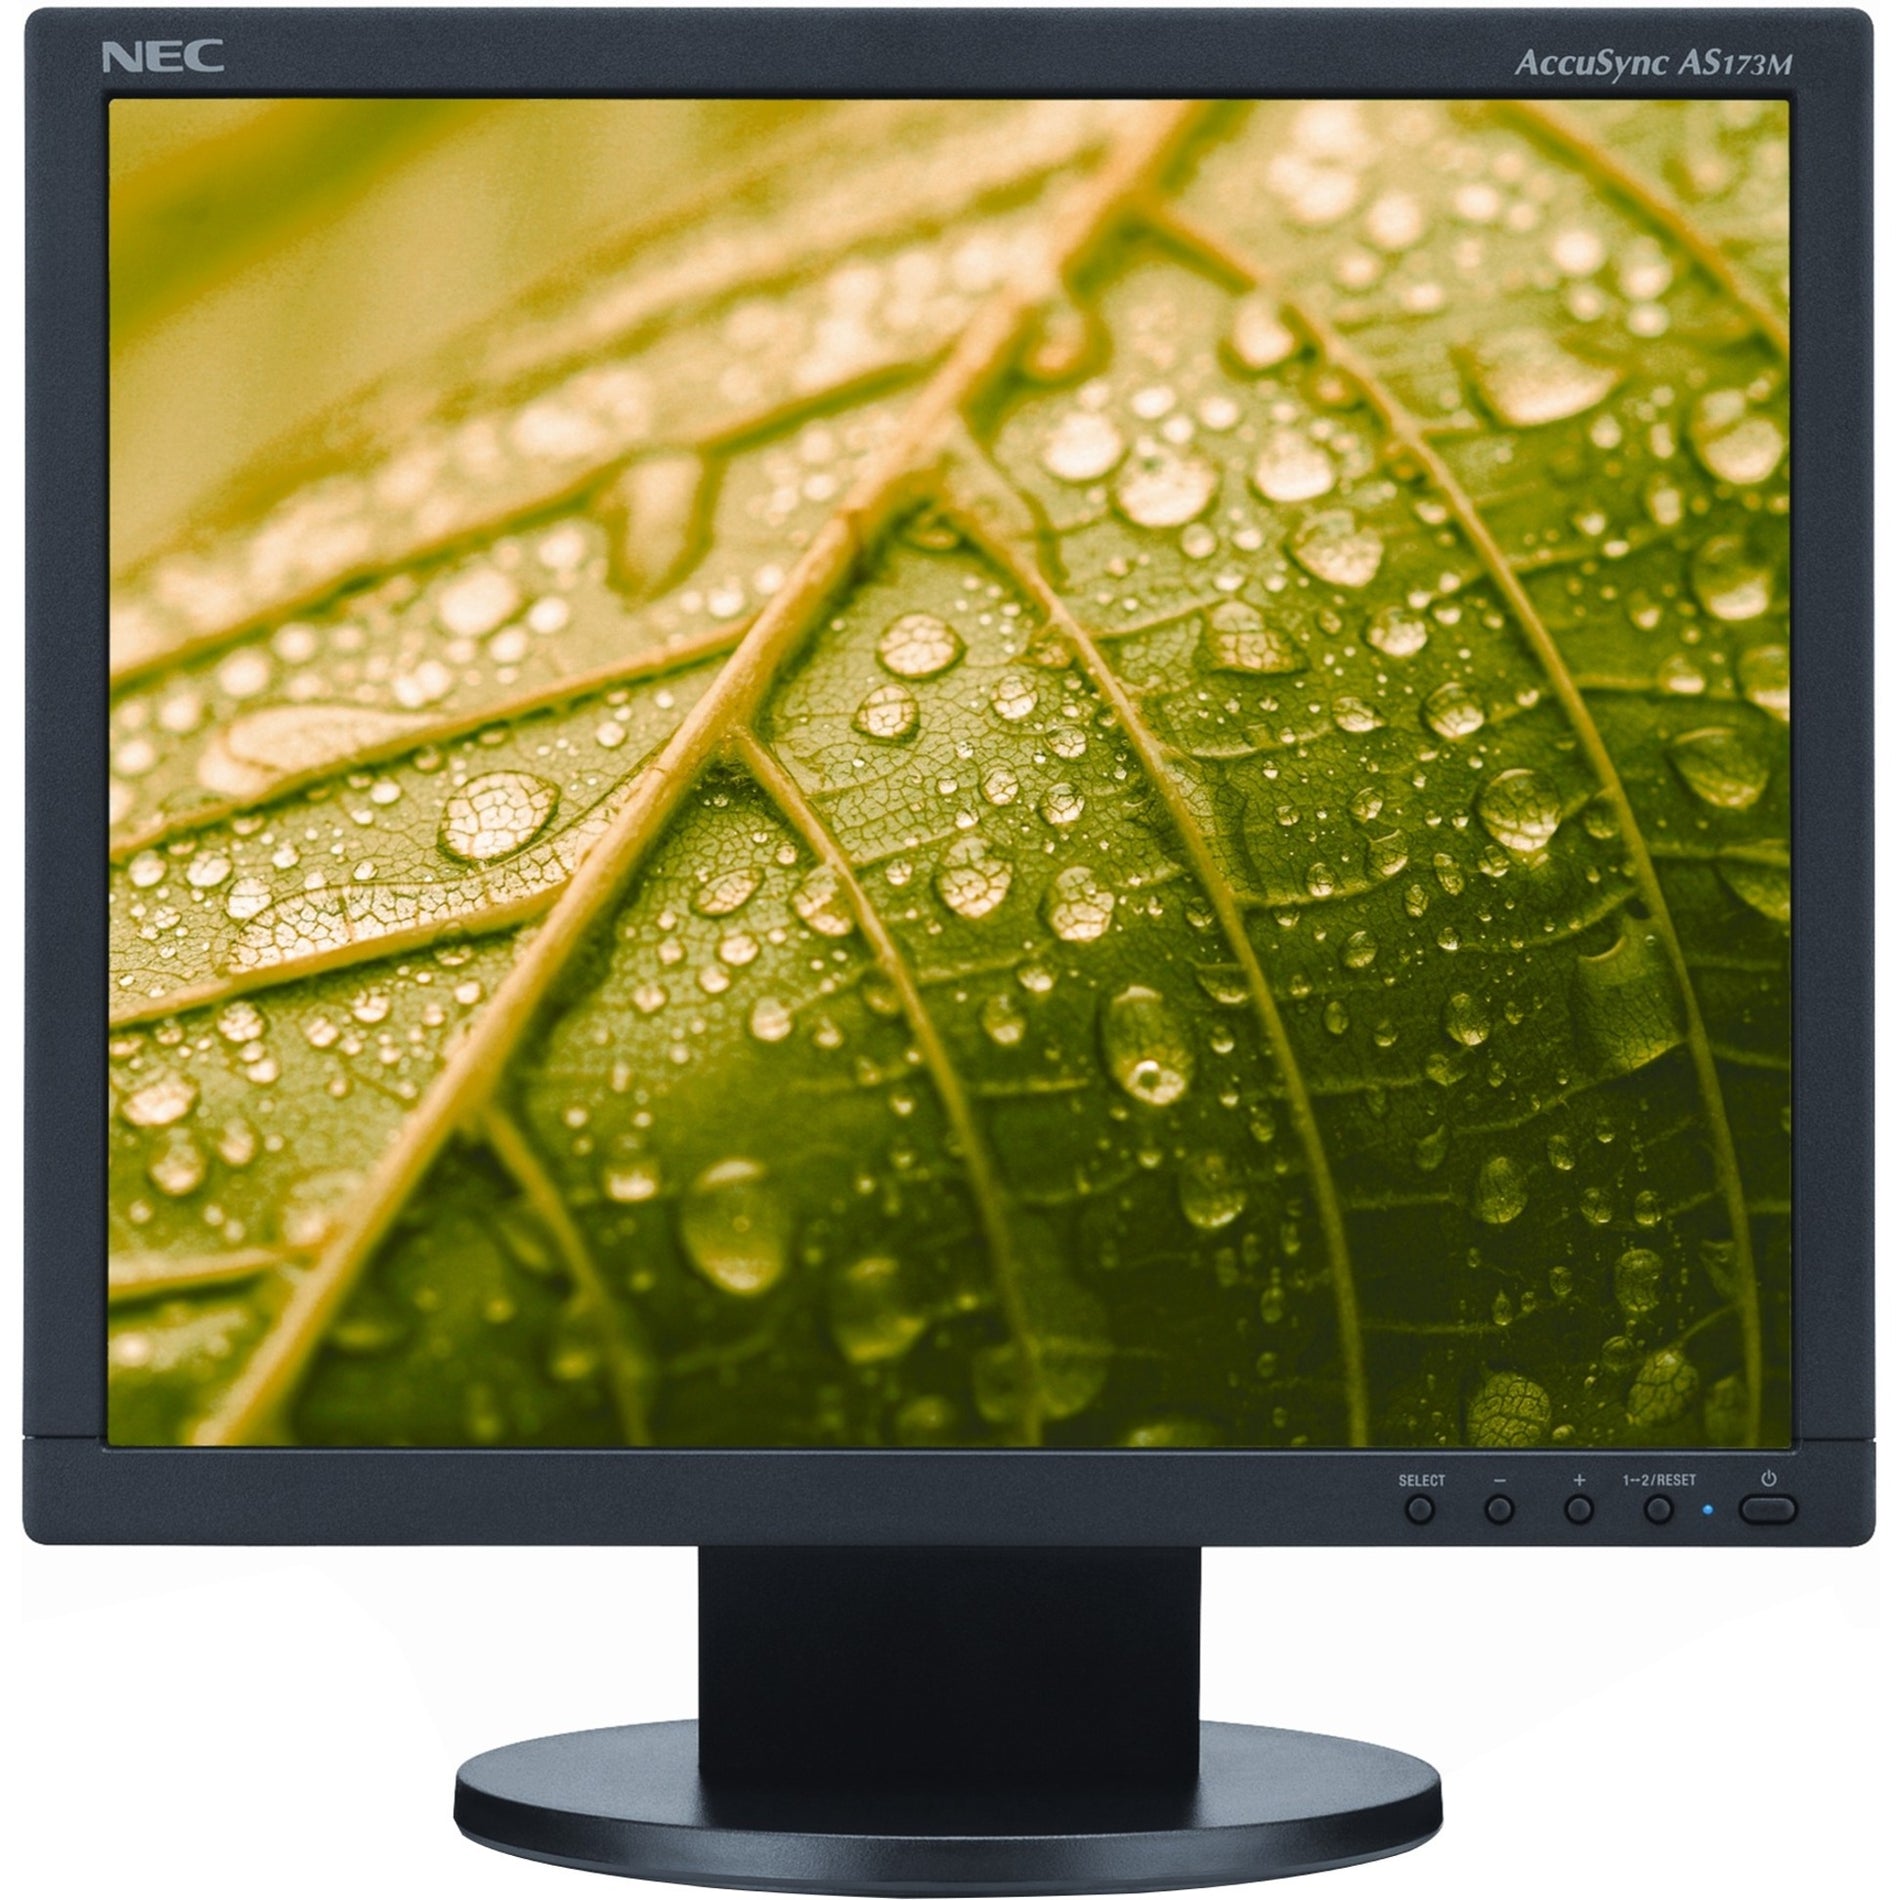 NEC Display AS173M-BK AccuSync 17" LCD Monitor, LED Backlighting, 1280 x 1024, 5:4